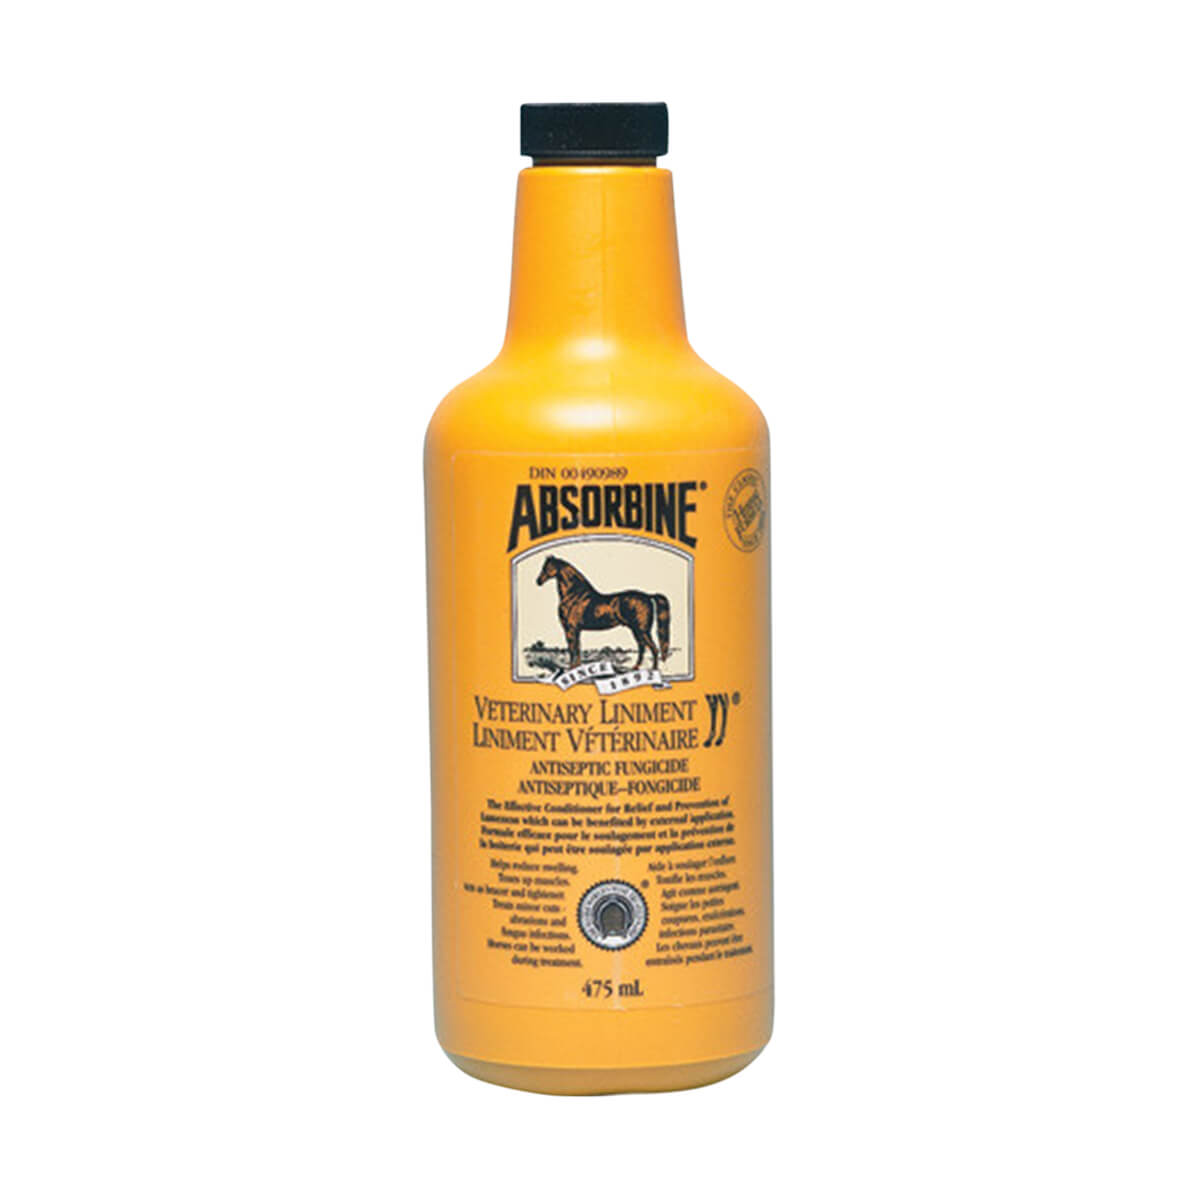 Veterinary Liniment - 475 ml